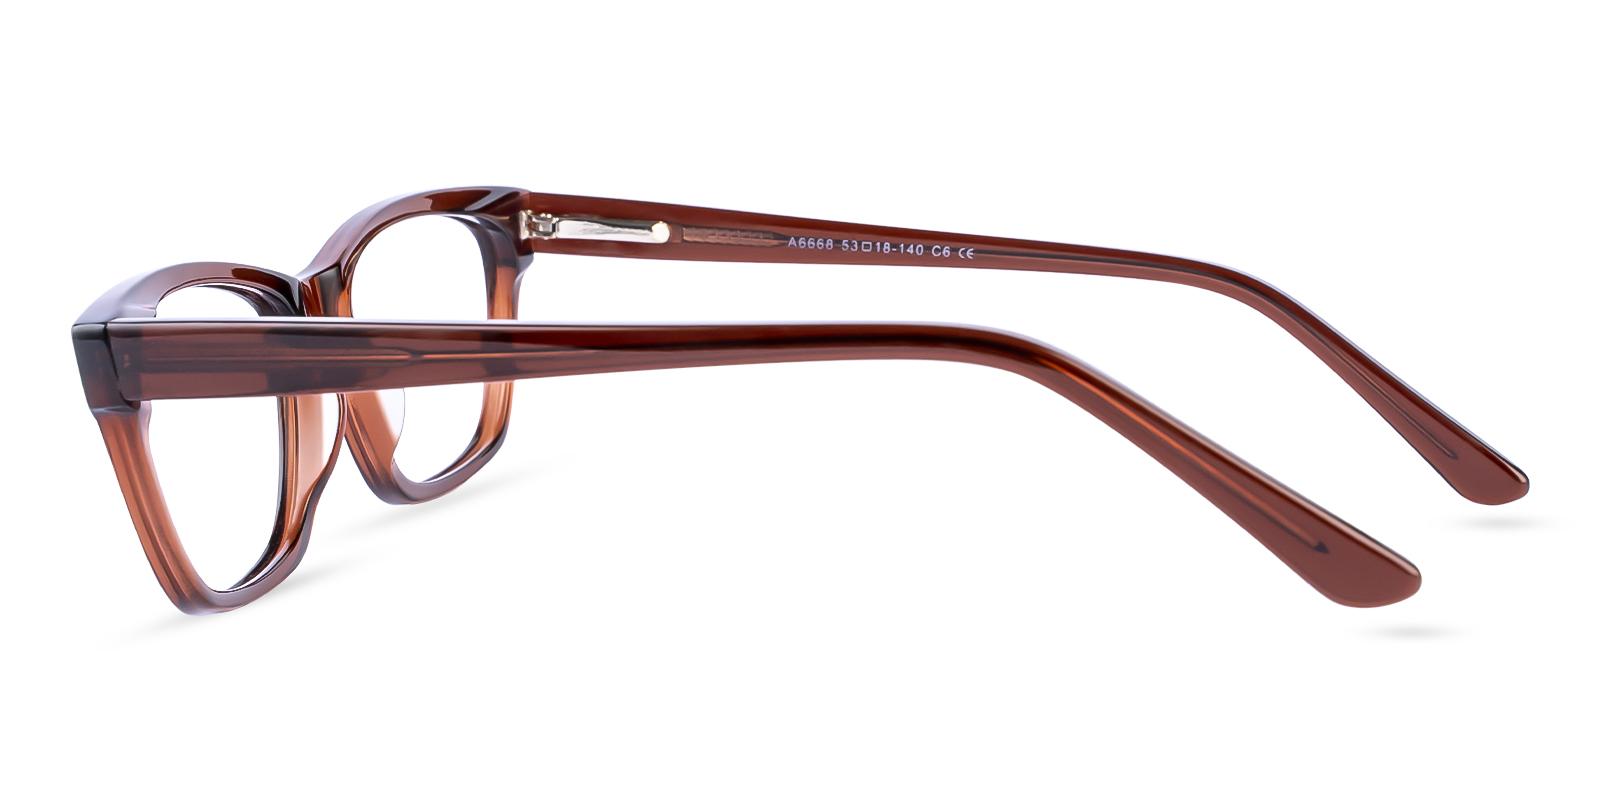 Demain Brown Acetate Eyeglasses , SpringHinges , UniversalBridgeFit Frames from ABBE Glasses